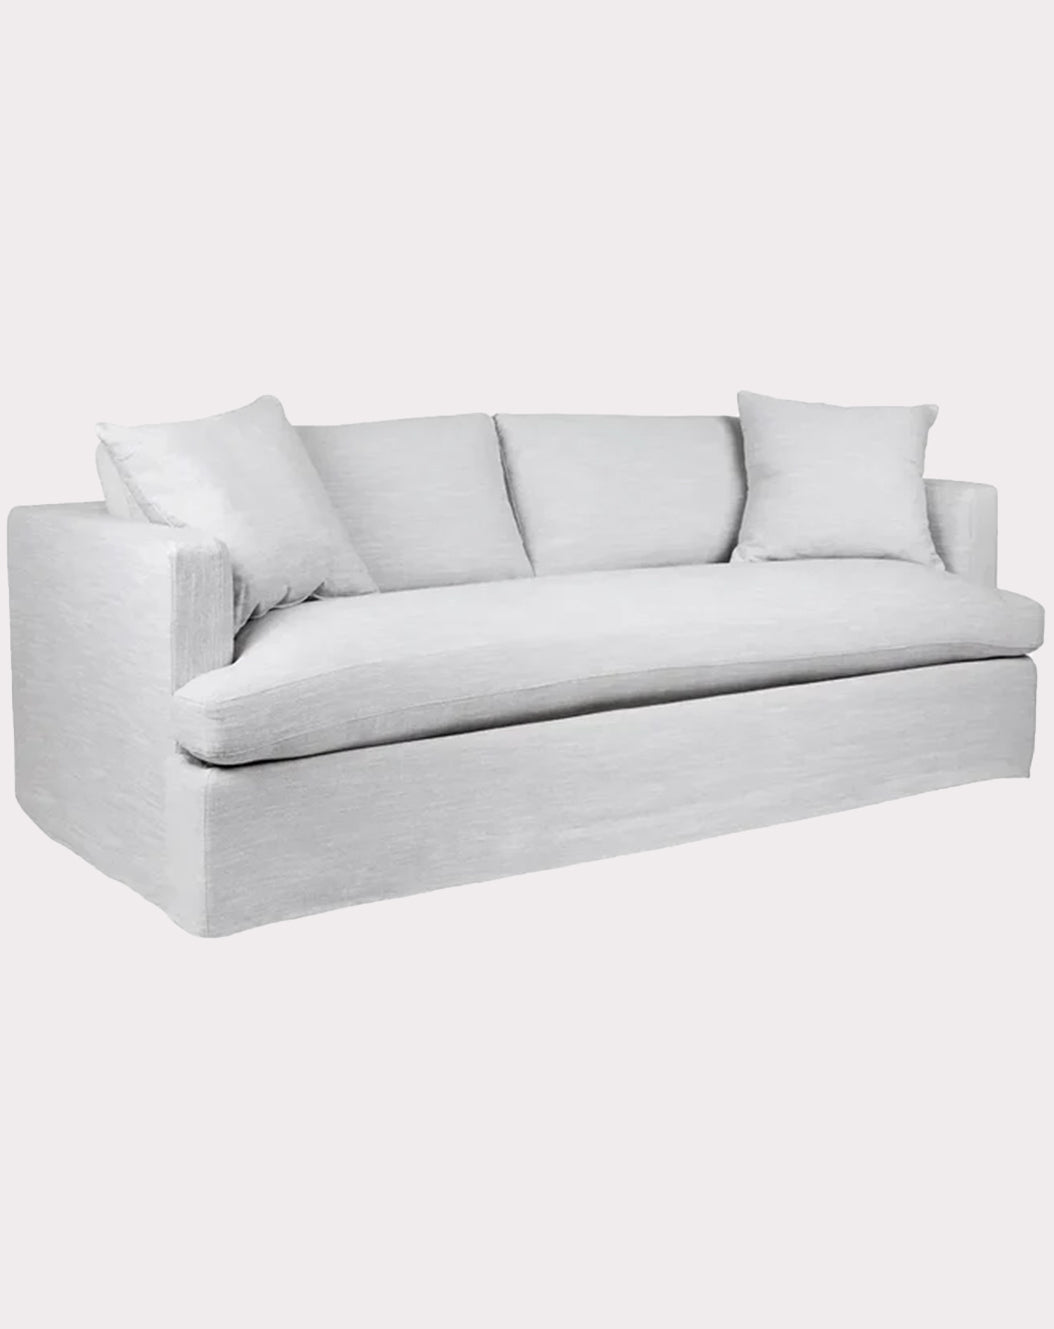 Burleigh 3 Seater Slip White Cover Sofa